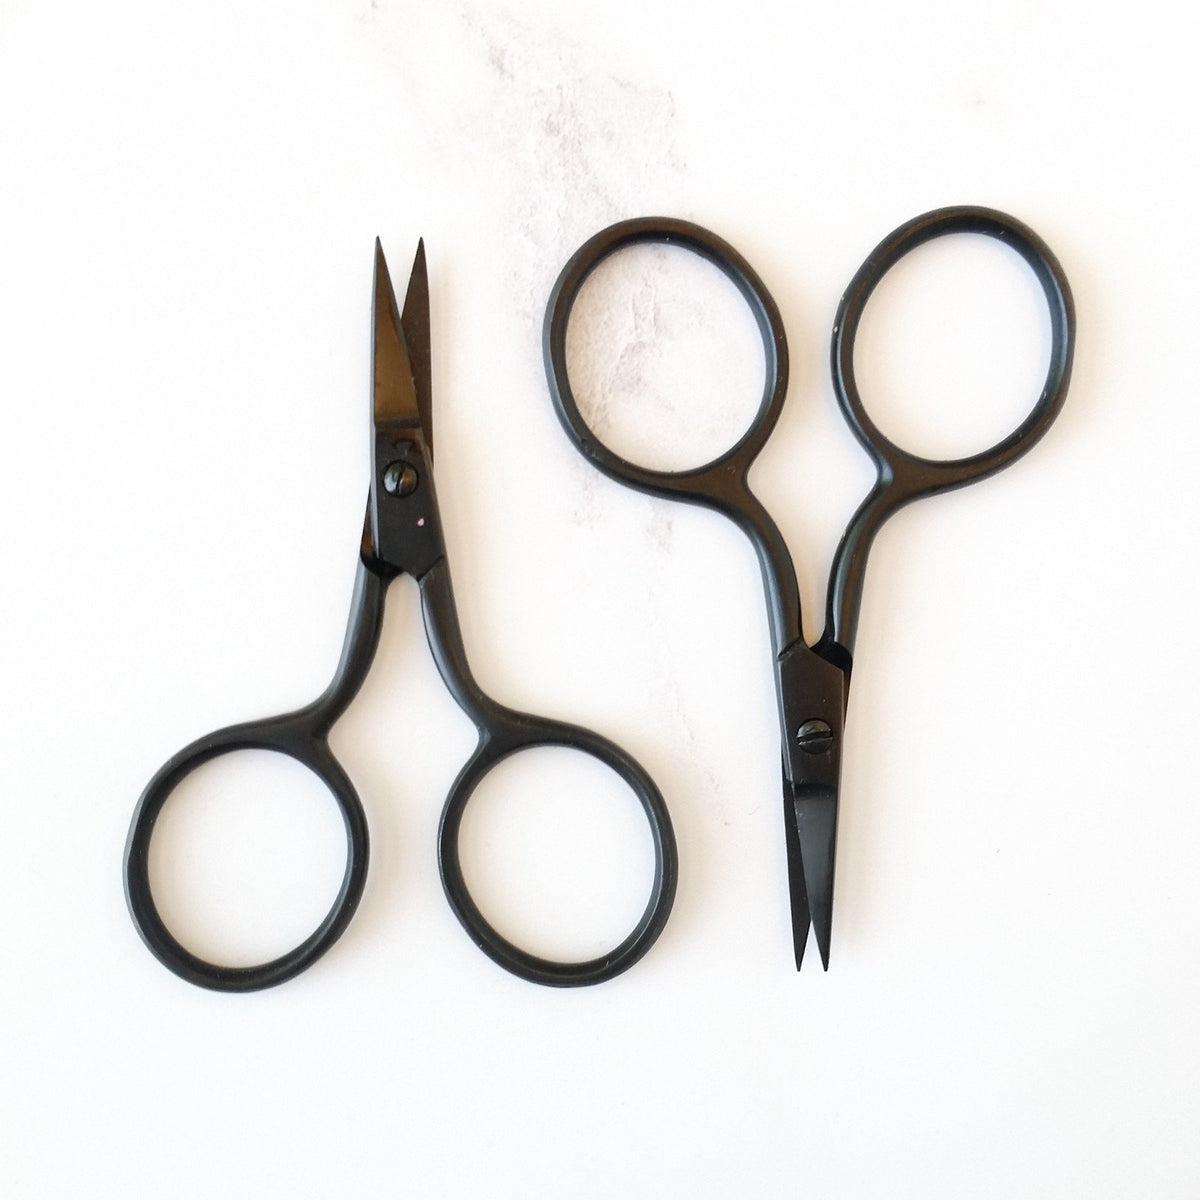 Tiny Snips black embroidery scissors